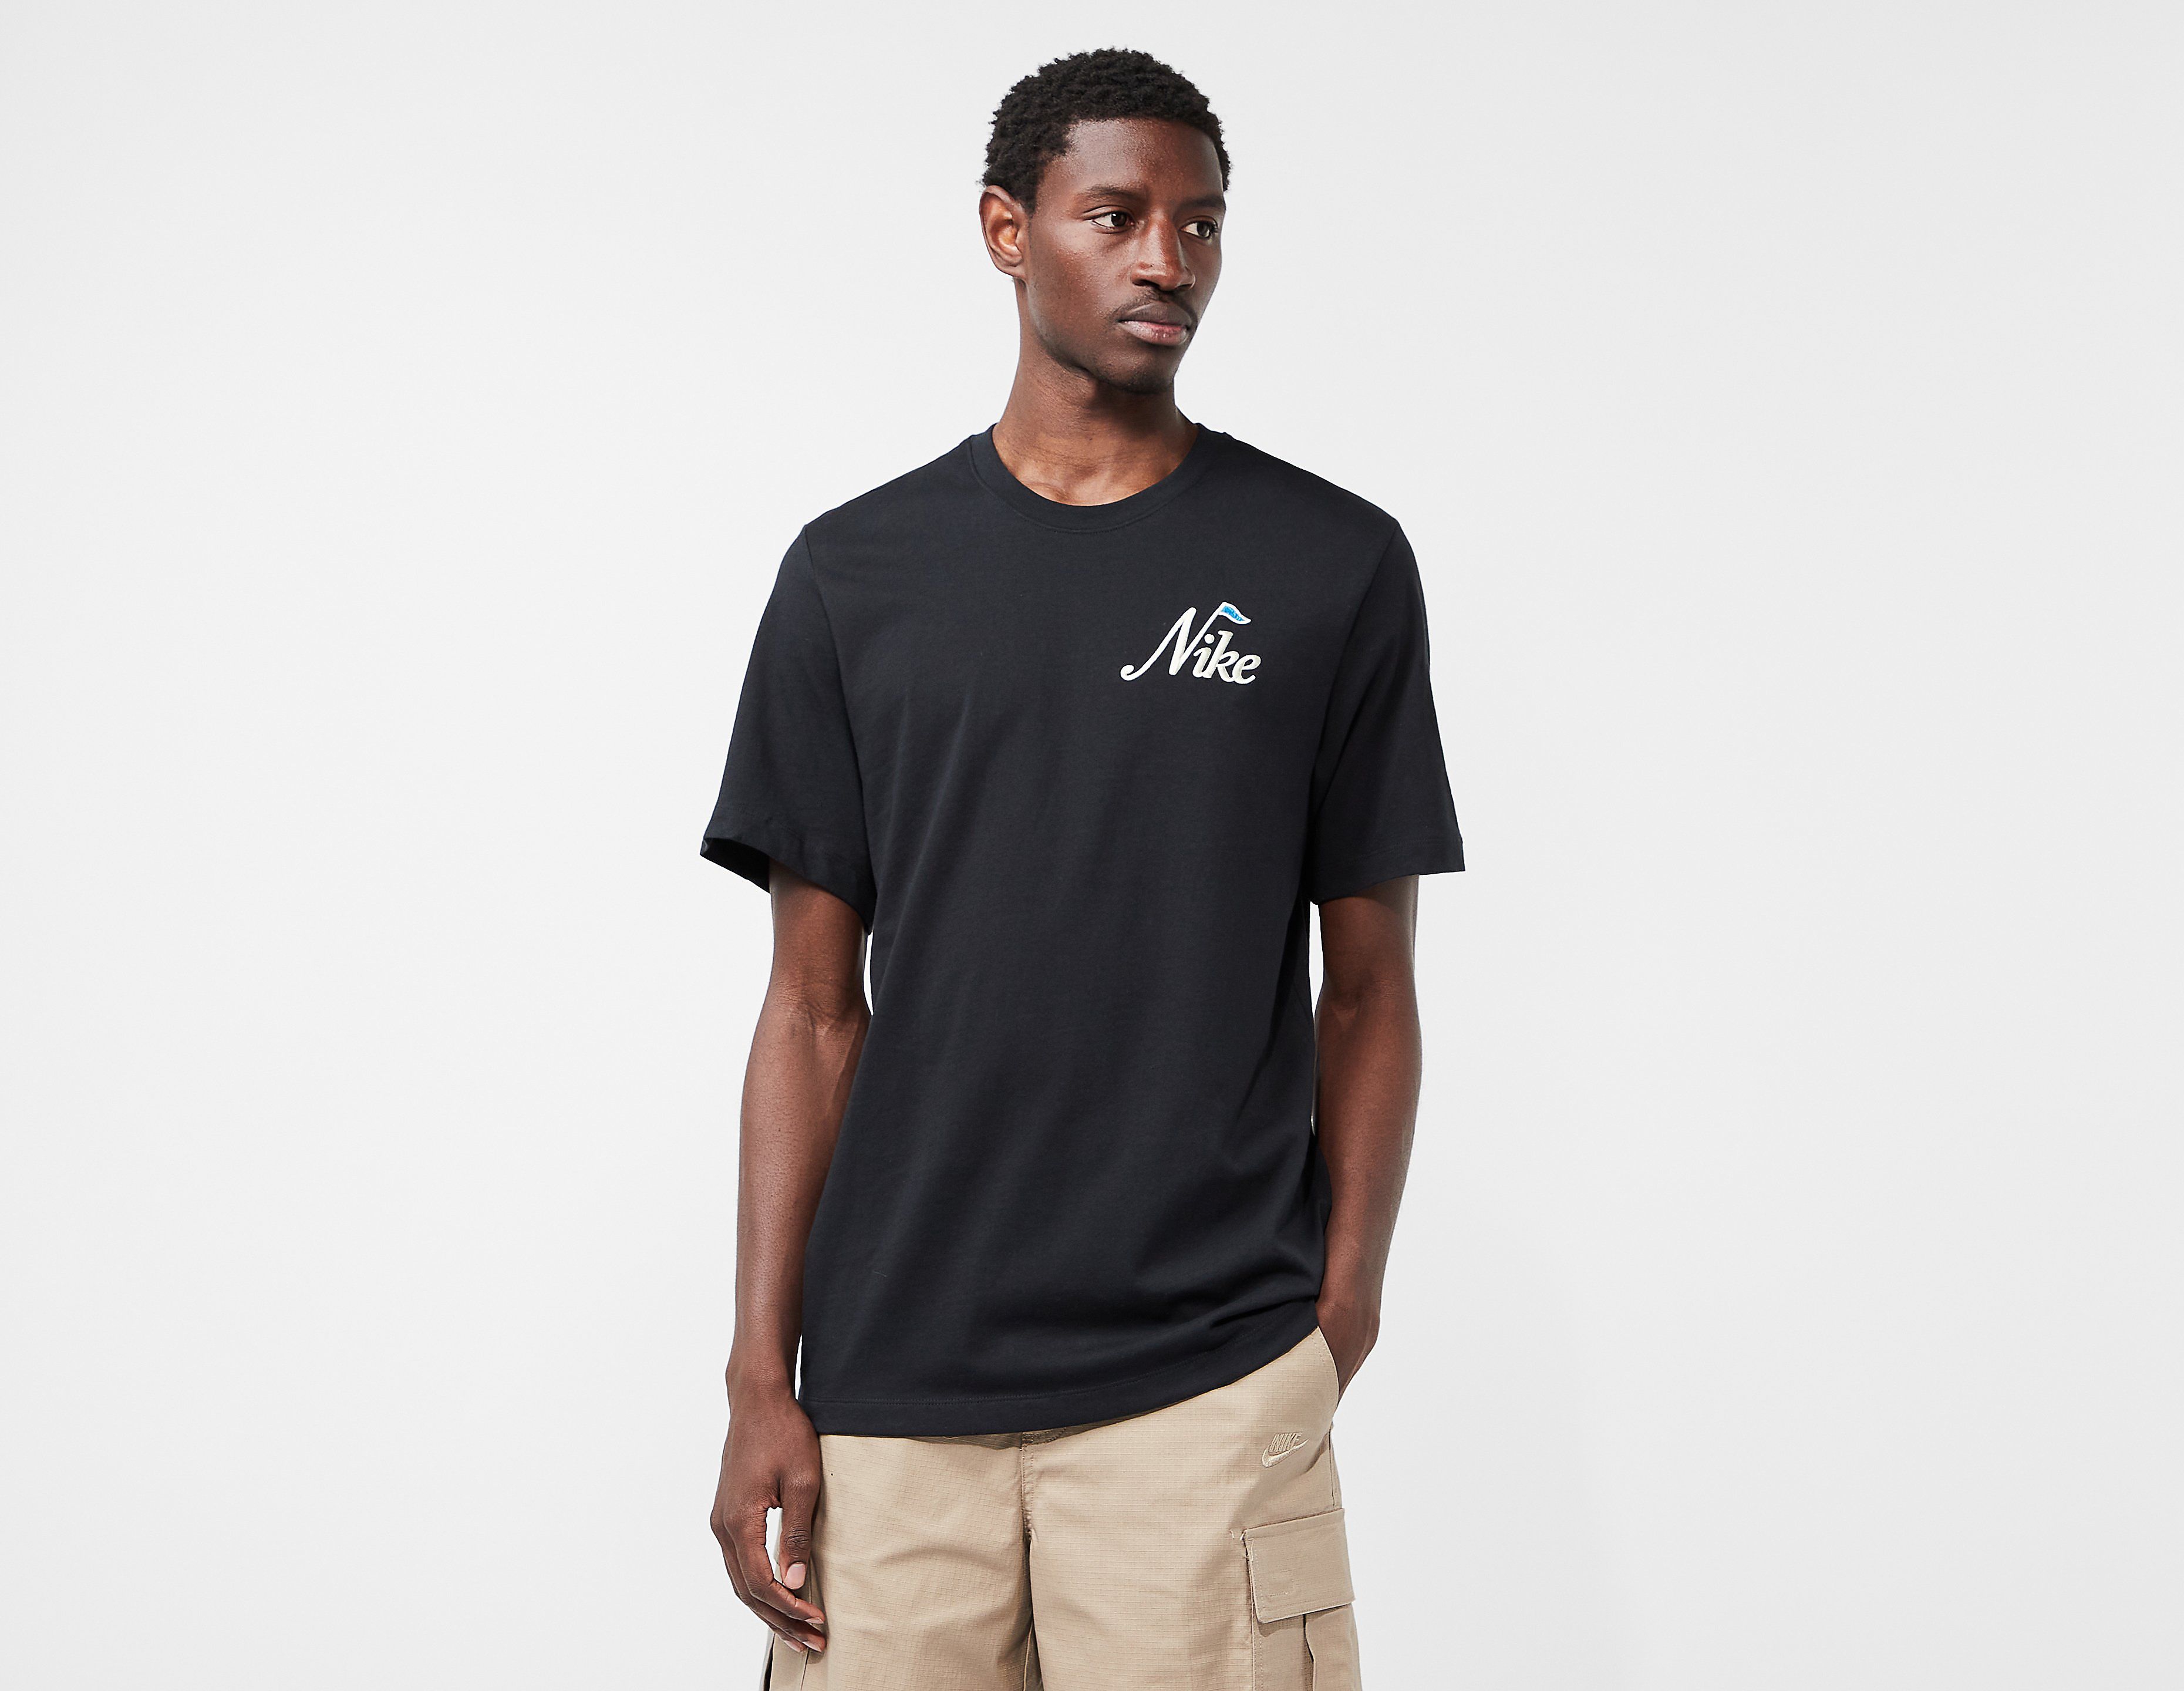 Nike Golf T-Shirt, Black